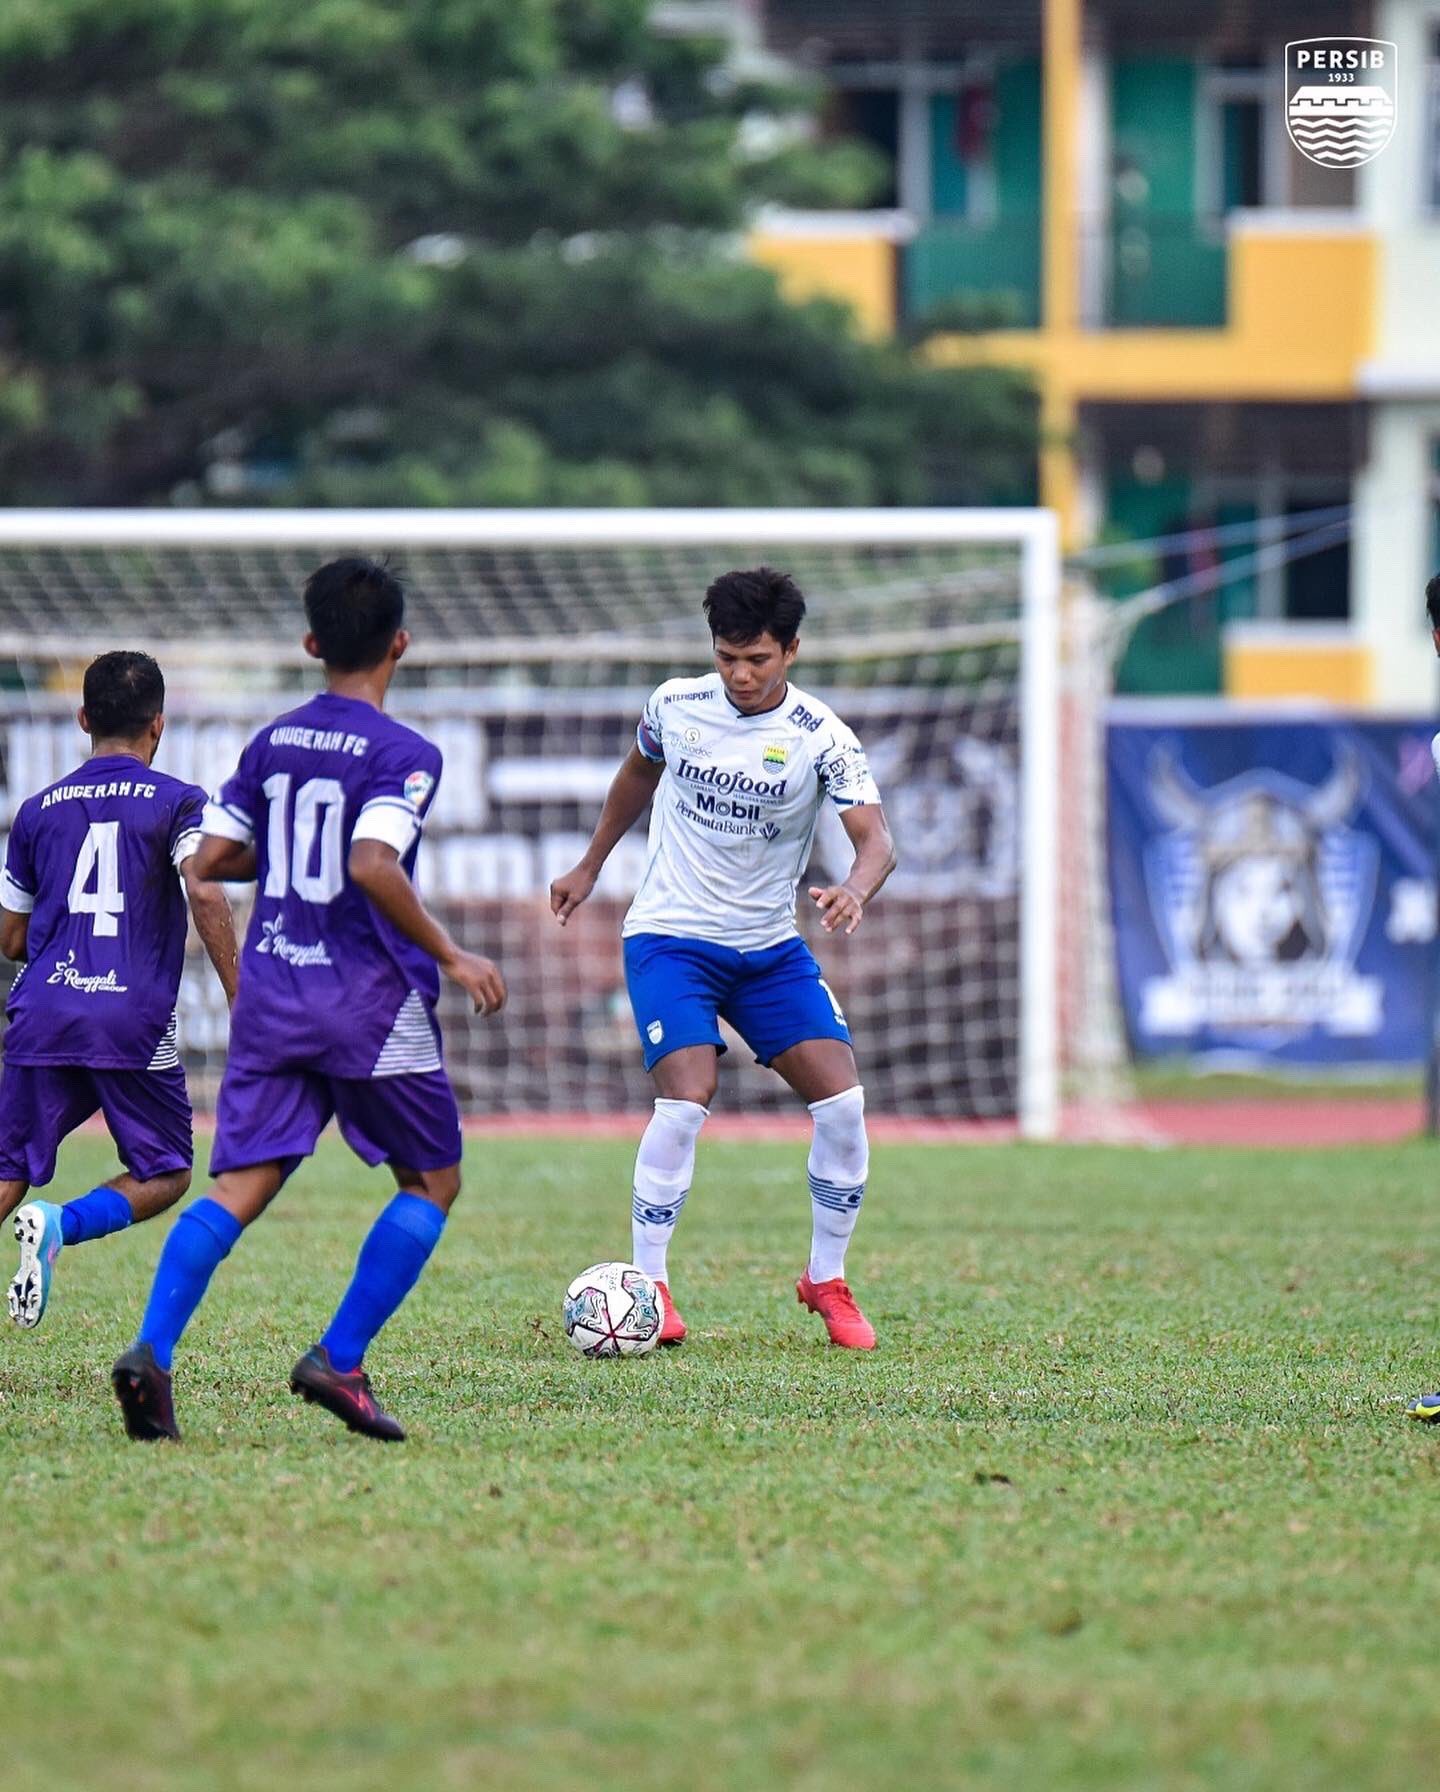 Hasil Uji Coba Persib vs Batam Renggali FC: David da Silva Hattrick, Maung Bandung Pesta 10 Gol